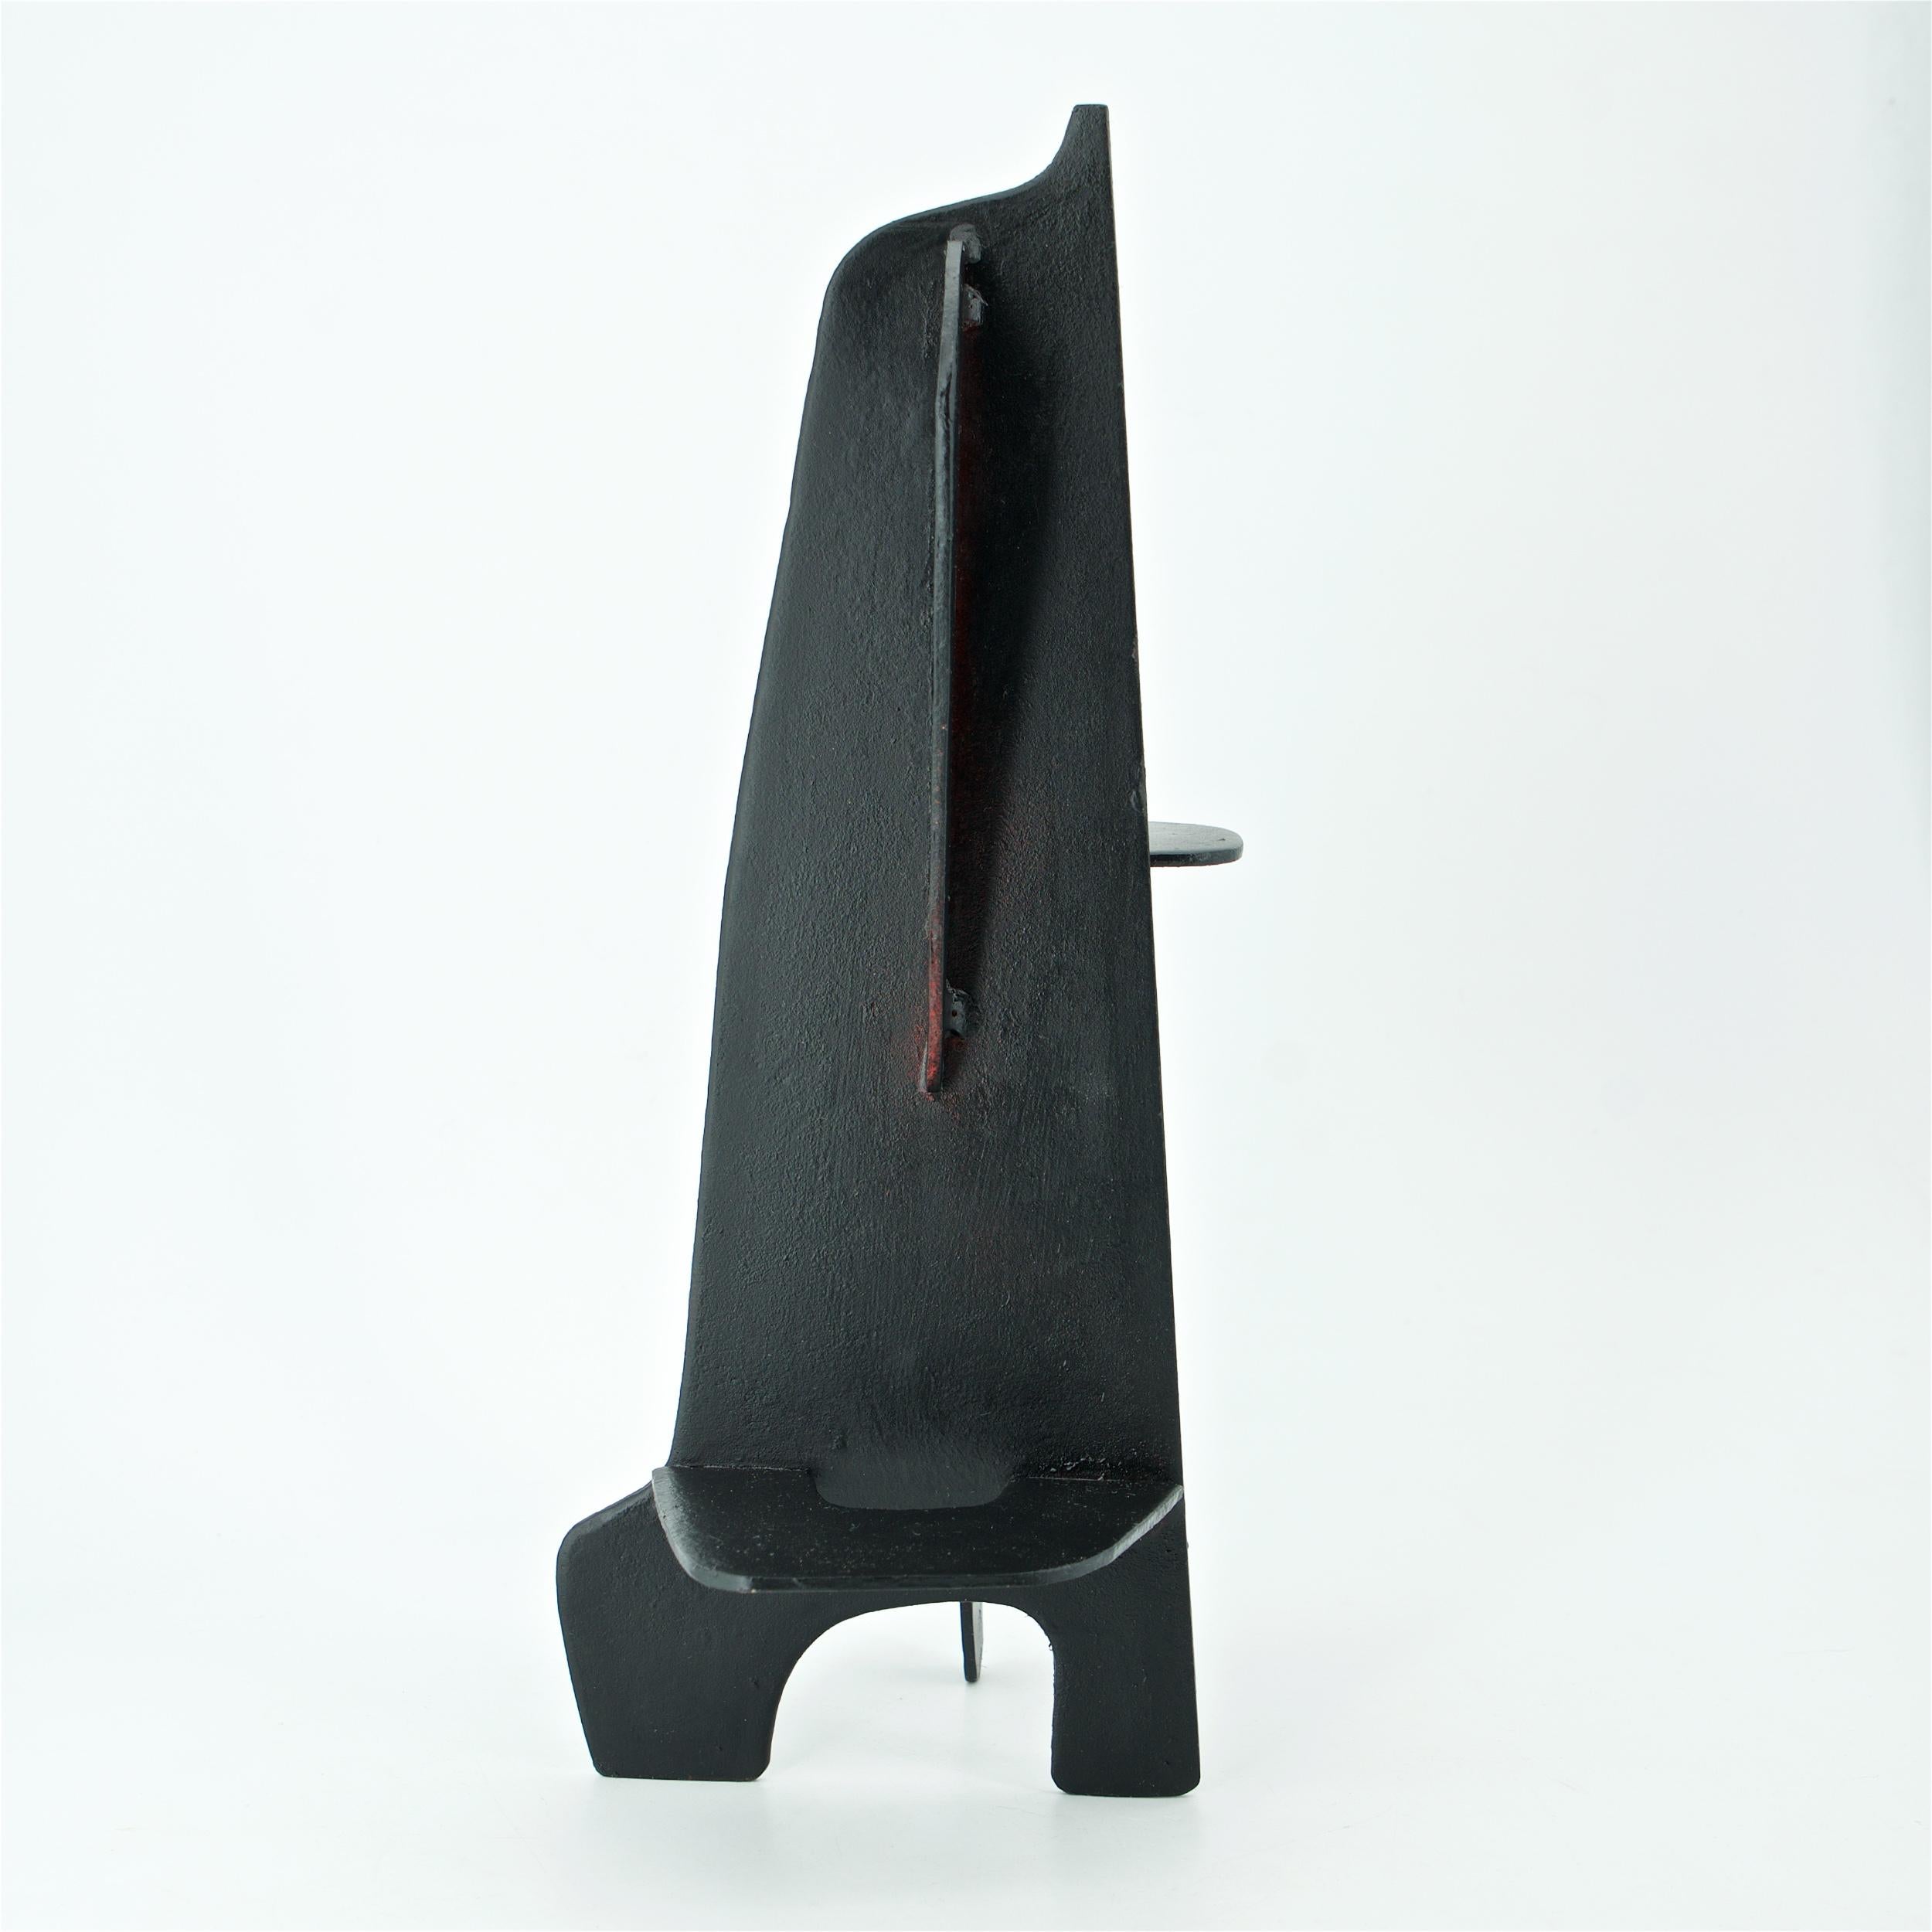 American John Paul Philippe Steel Panel Table Sculpture Abstract Alexander Calder Style